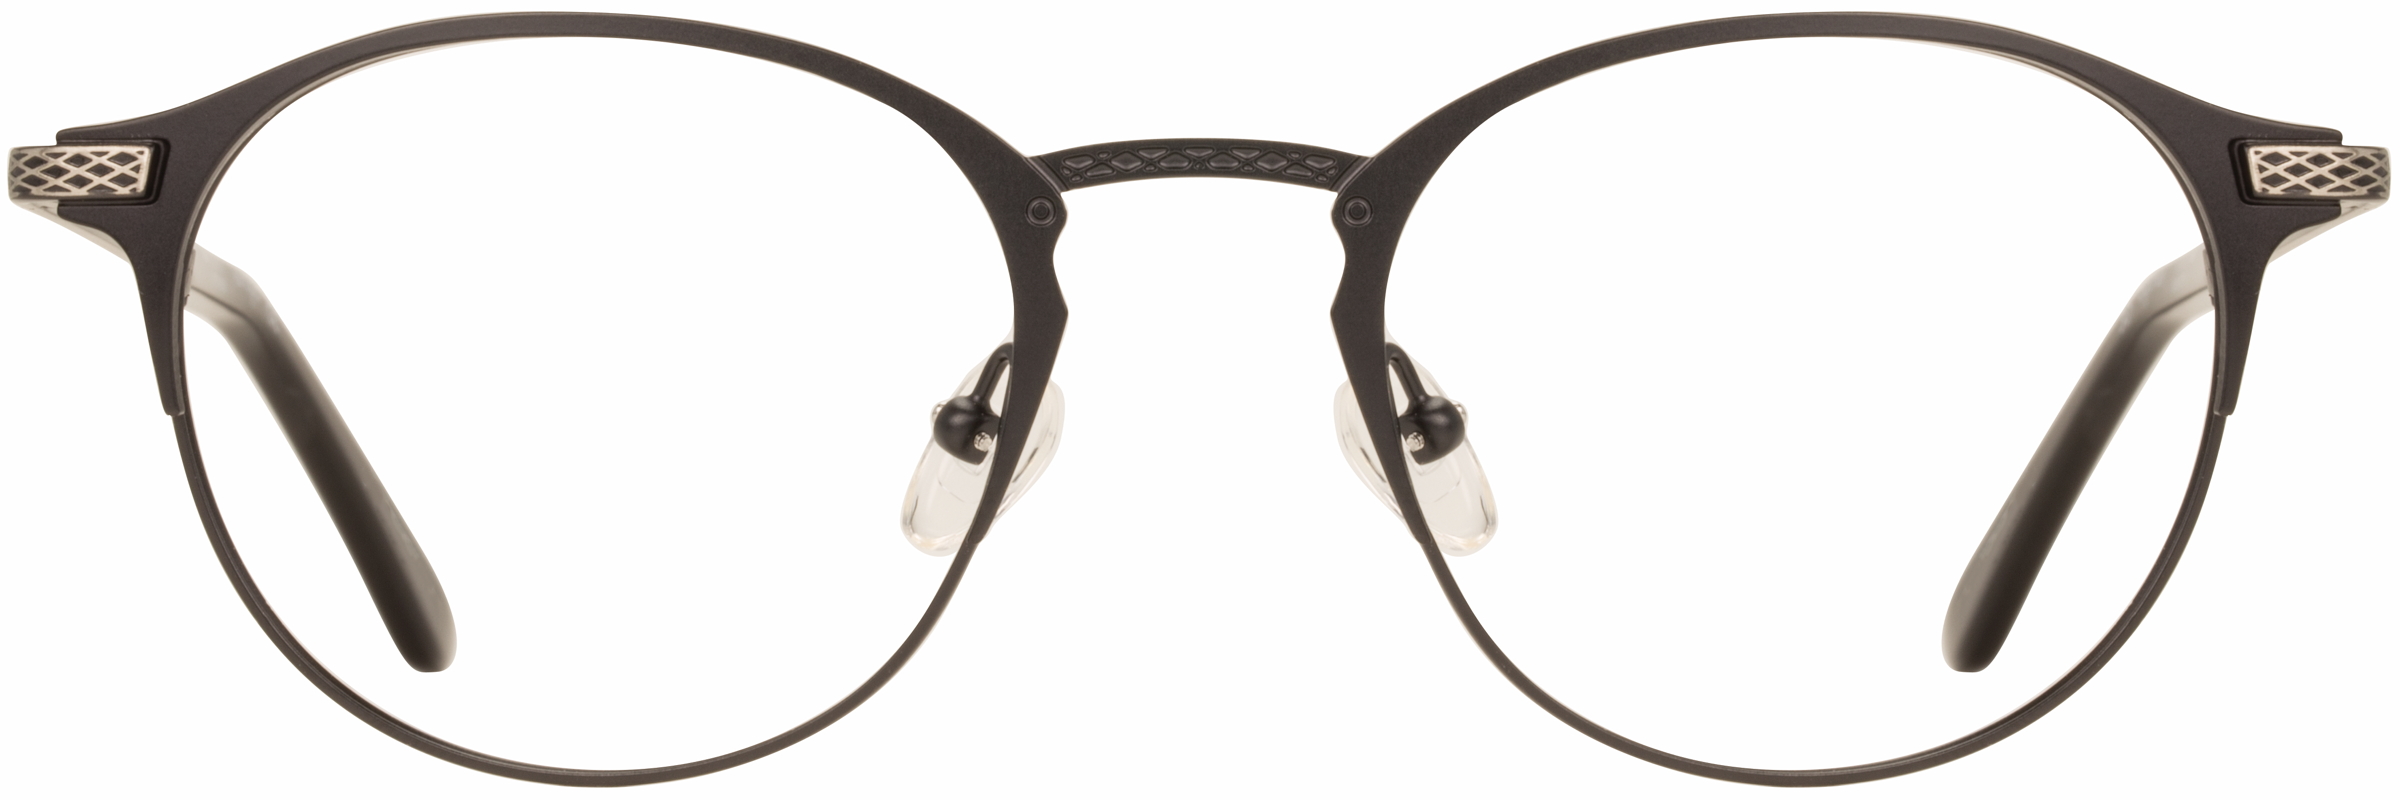 Picture of Scott Harris Vintage Eyeglasses SH-VIN-48